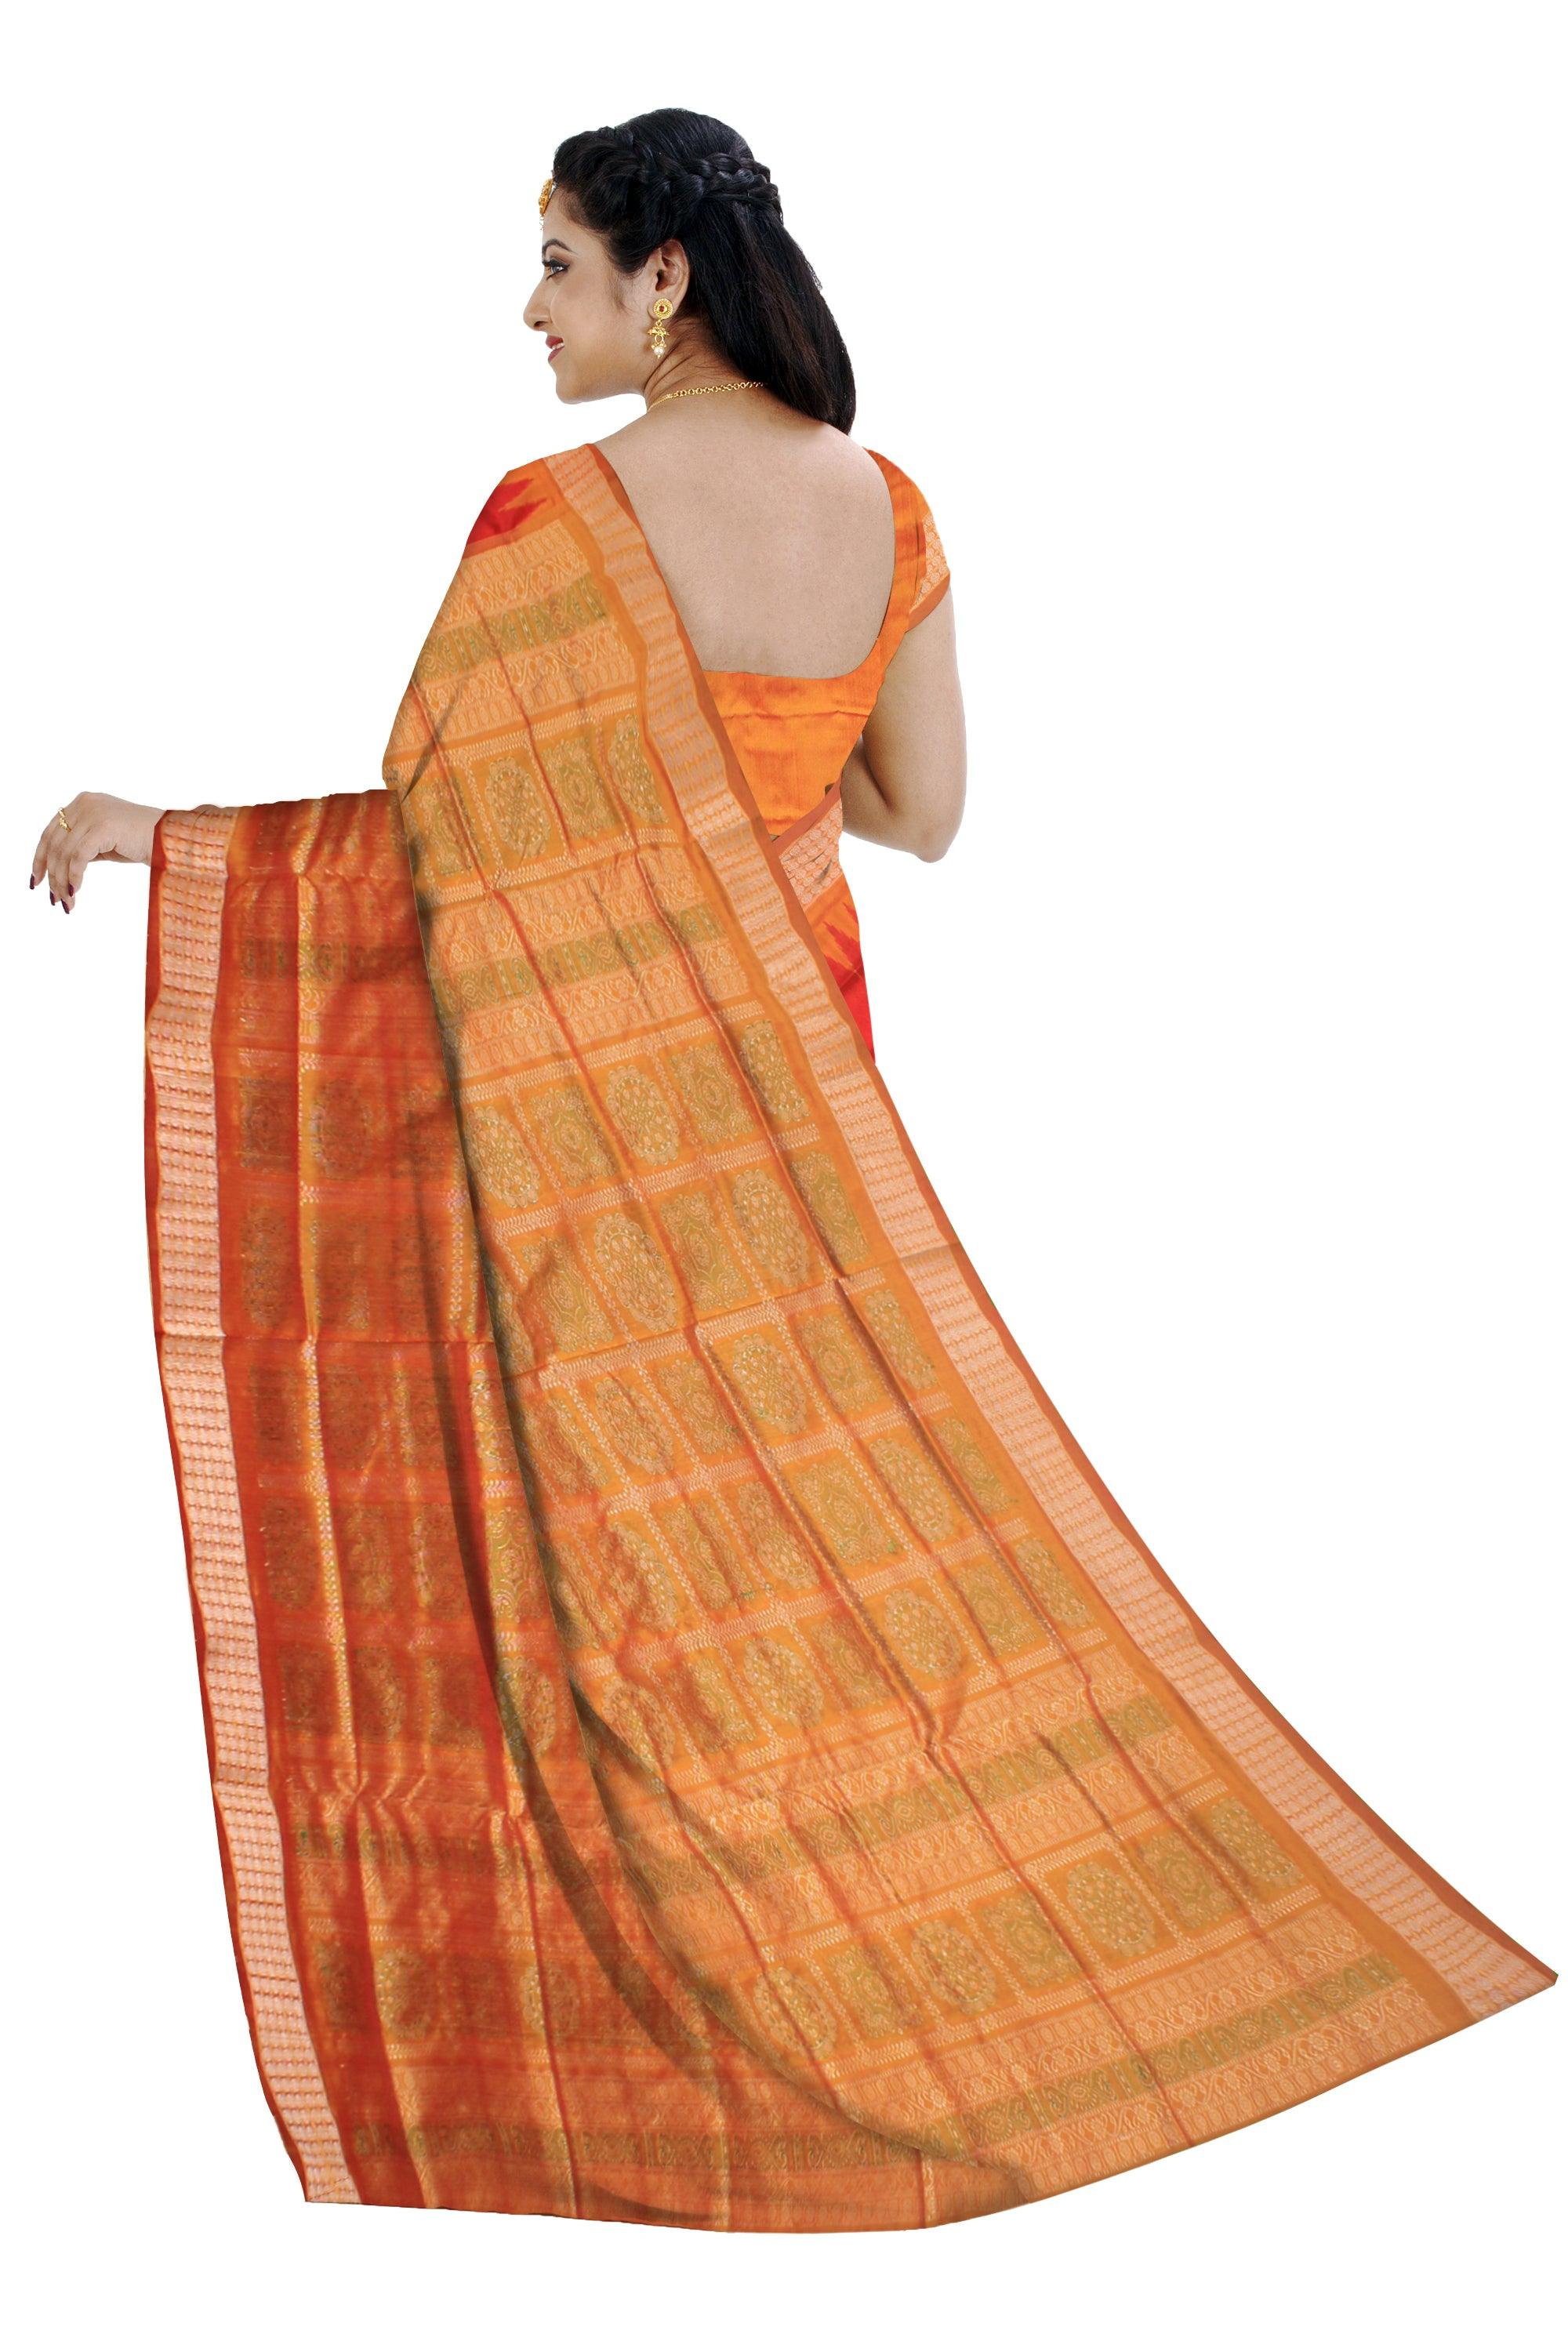 Red hand woven crepe Sambalpuri Pata saree with blouse. - Koshali Arts & Crafts Enterprise